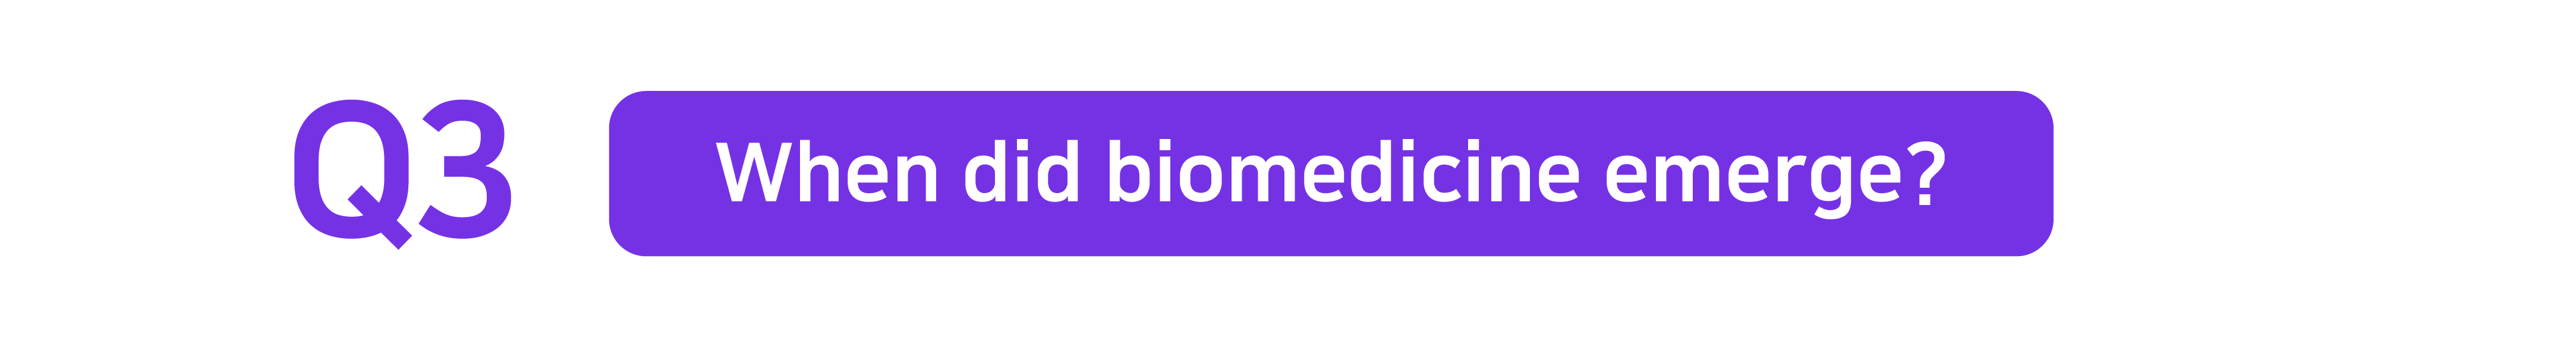 Q3. When did biomedicine emerge?